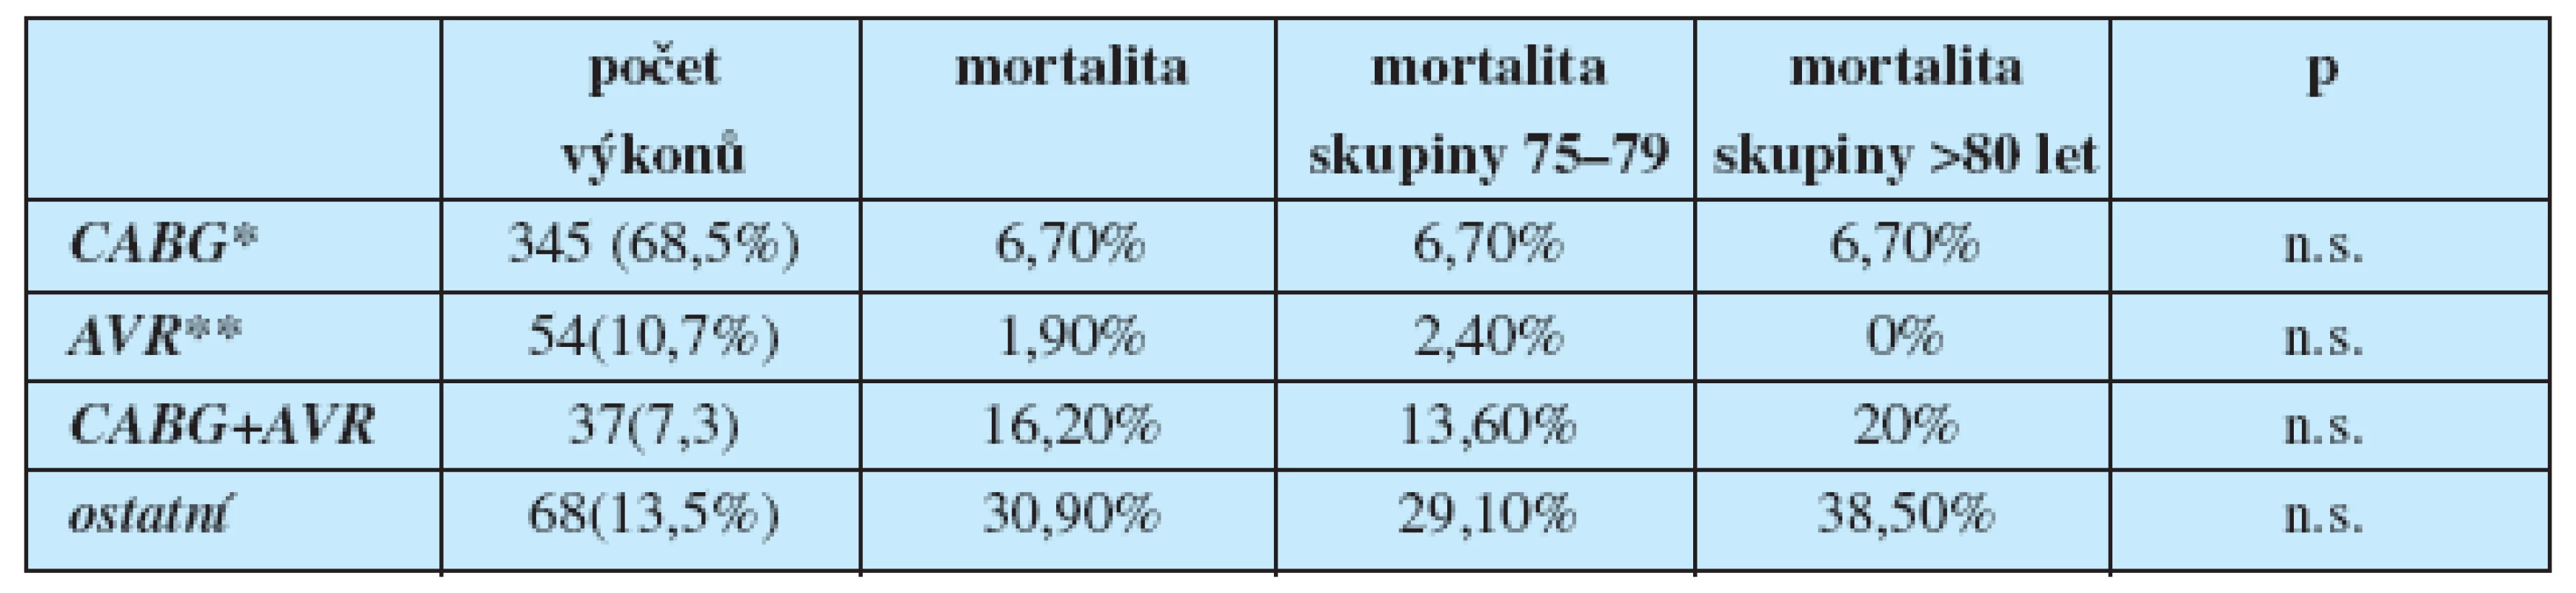 Spektrum výkonů a mortalita